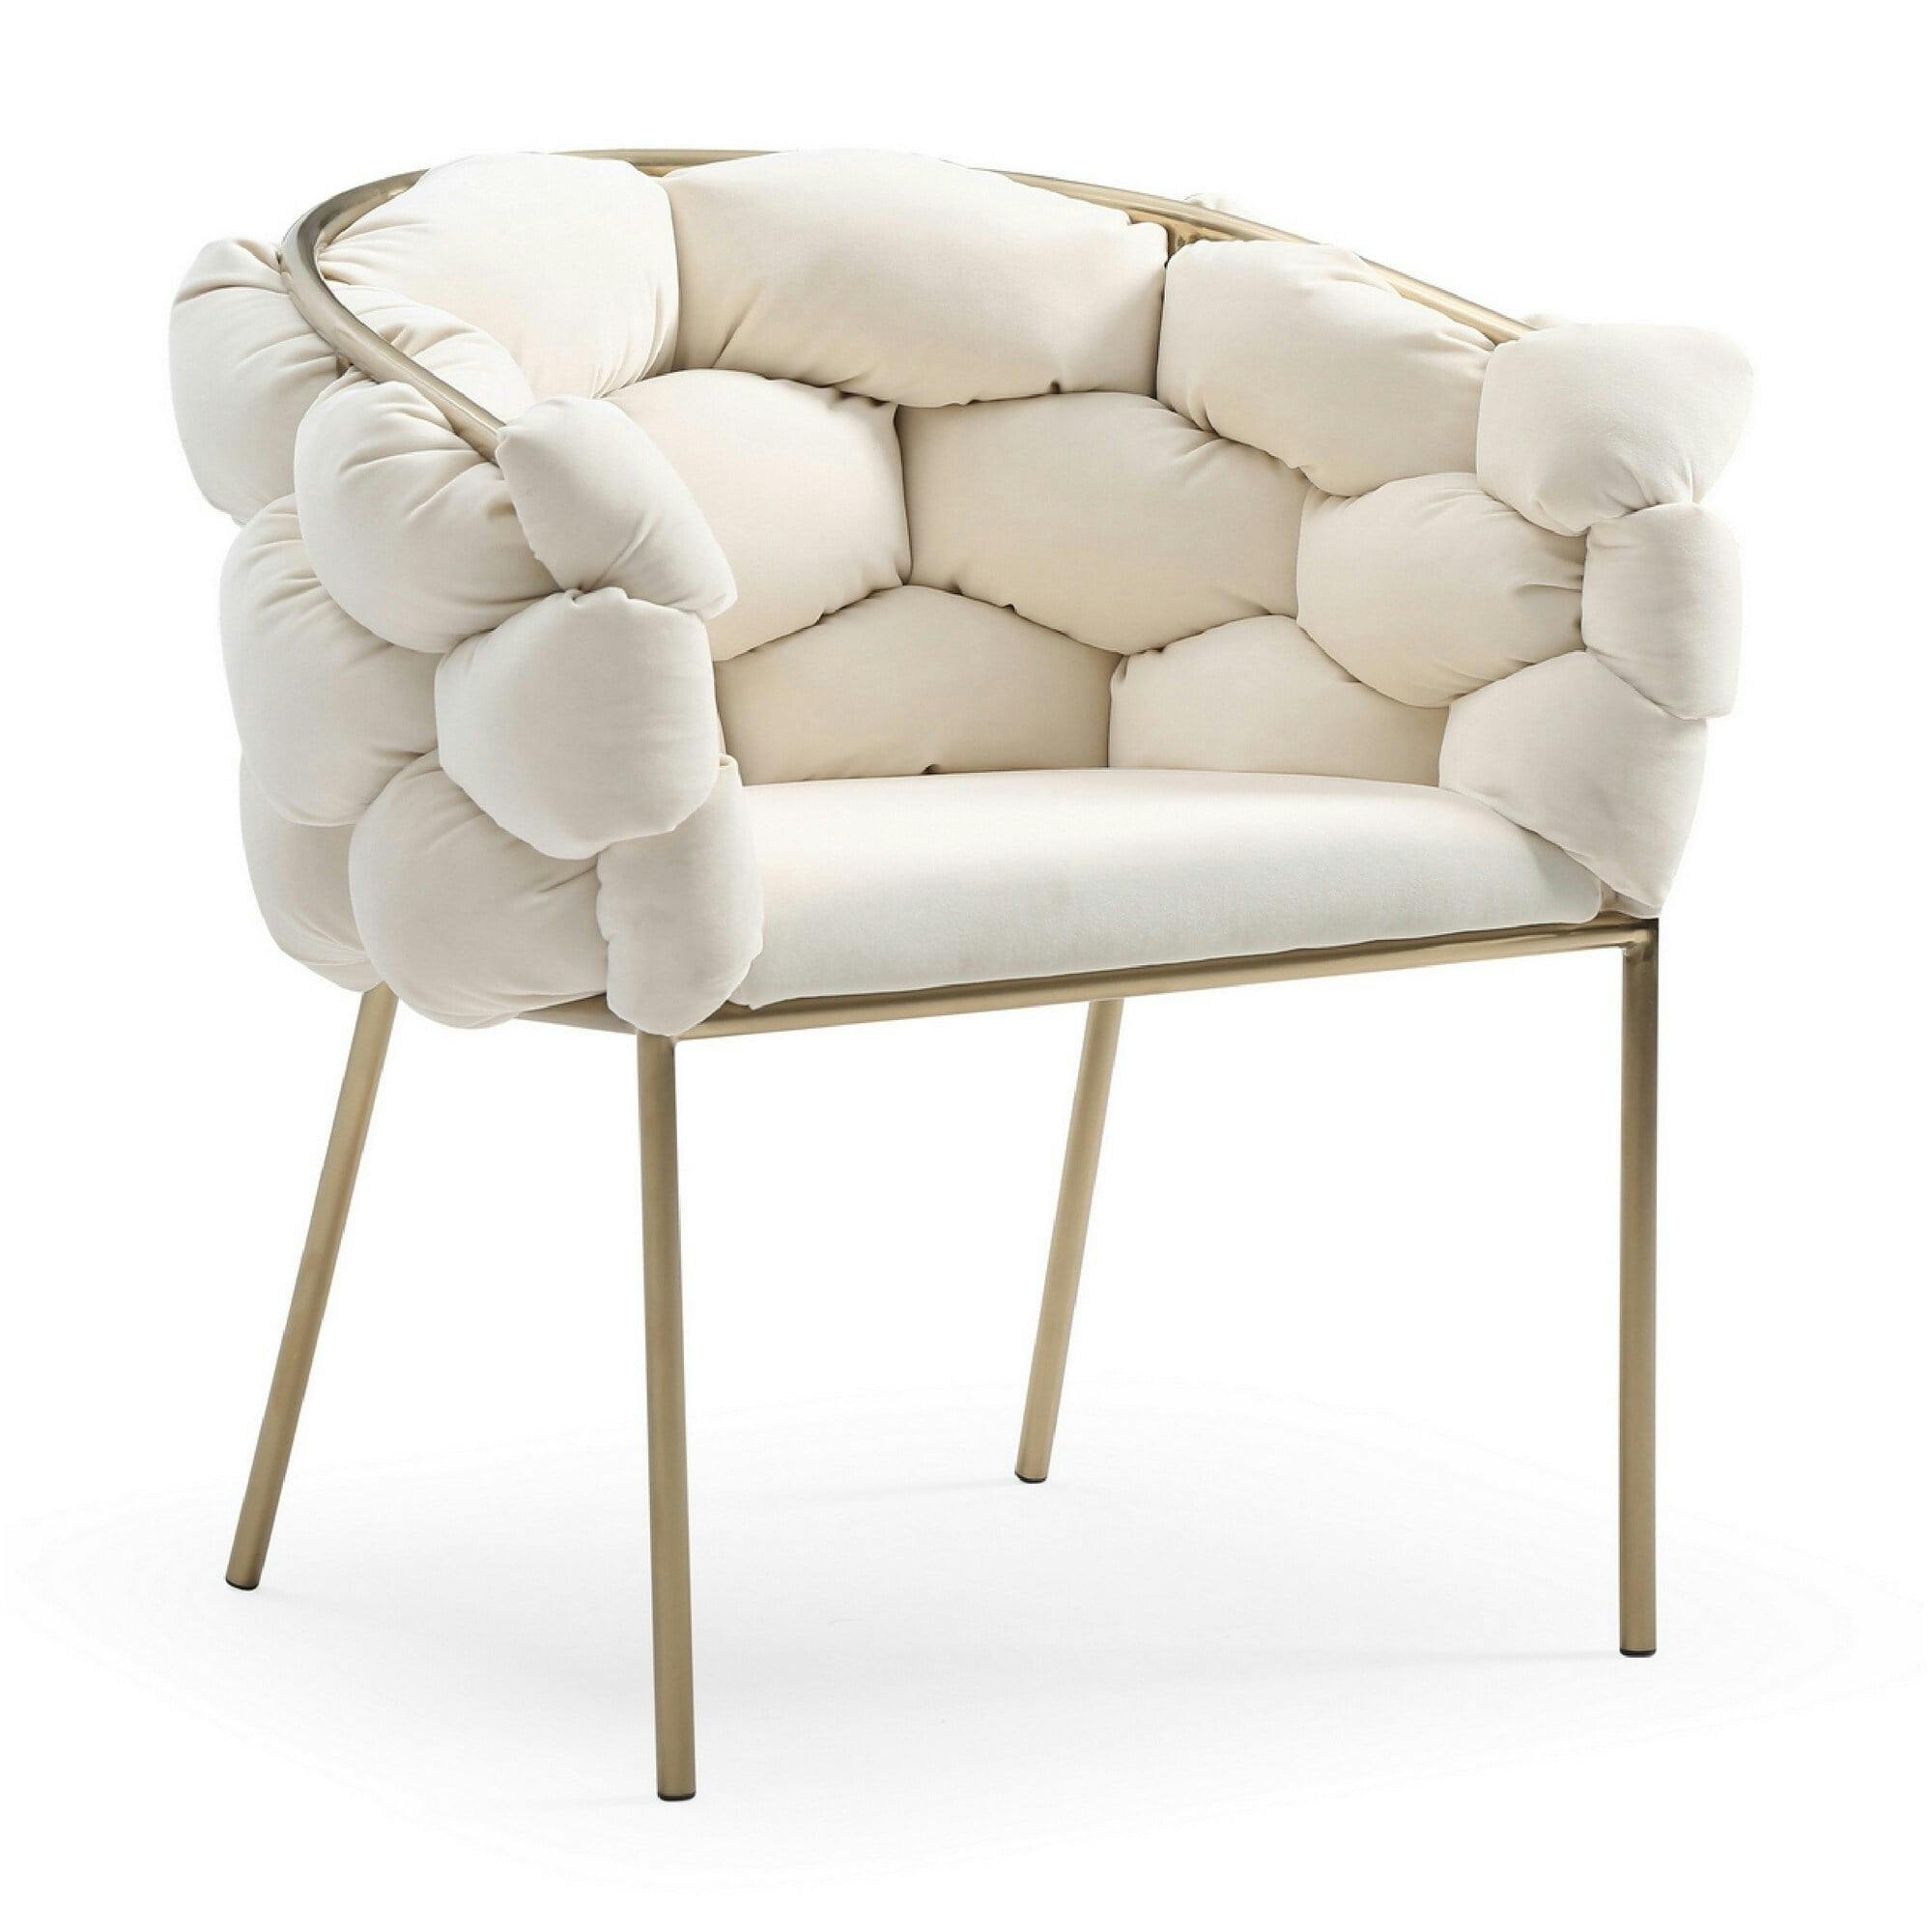 Luxurious White Velvet Bubble Tufted Arm Chair with Sleek Metal Legs